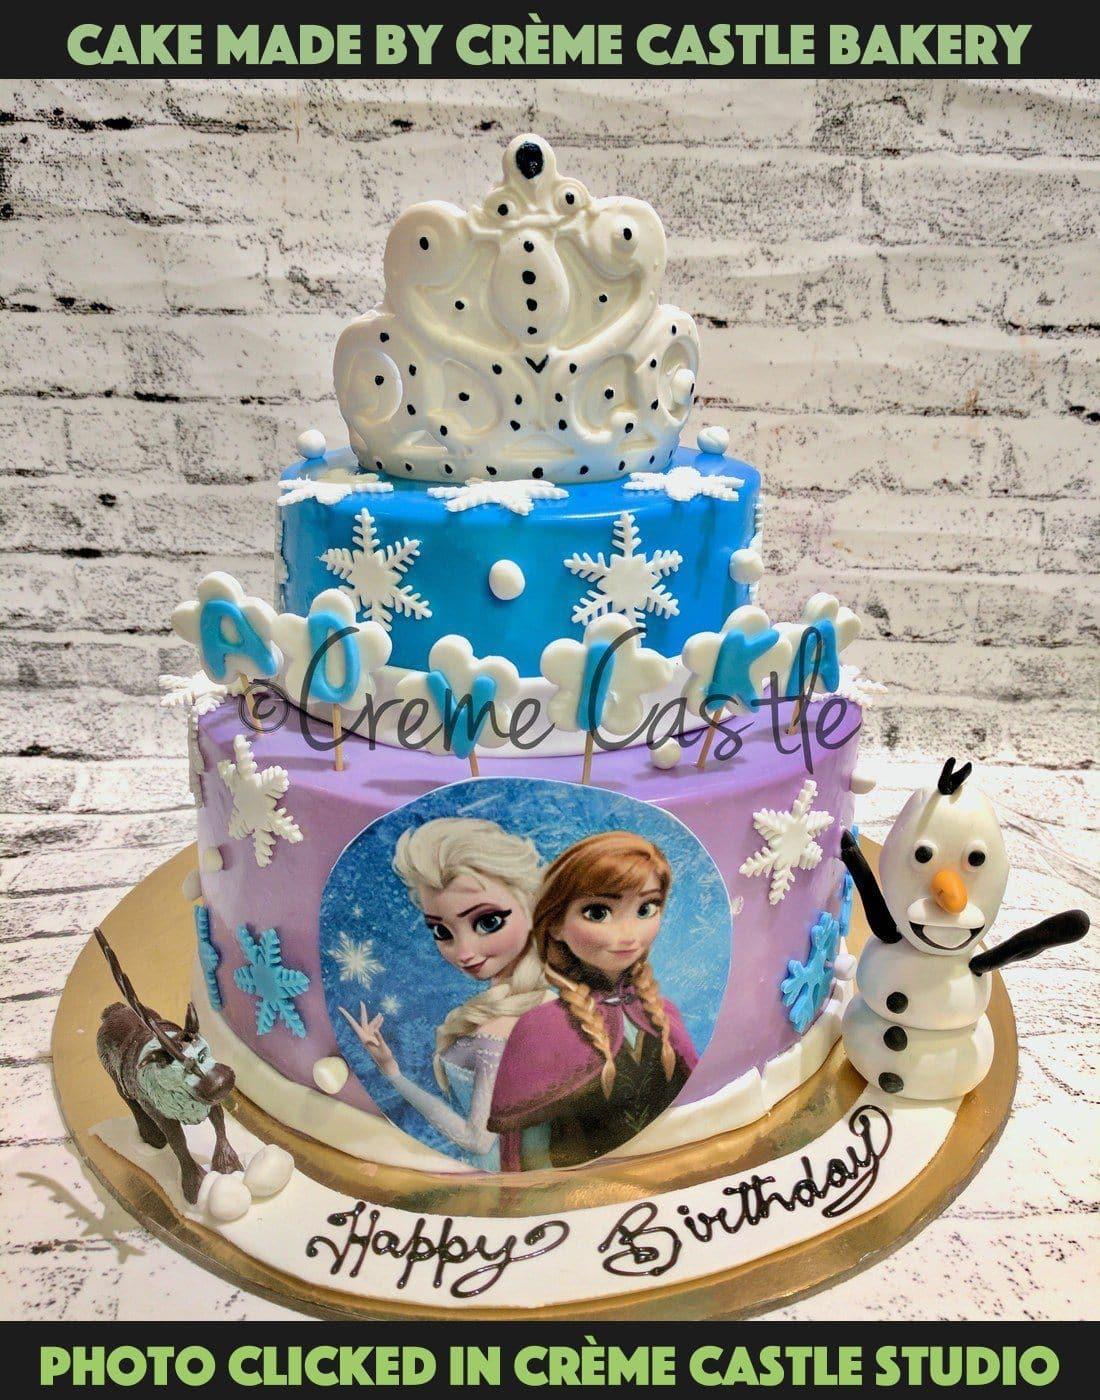 Order your Princesse Sofia birthday cake online